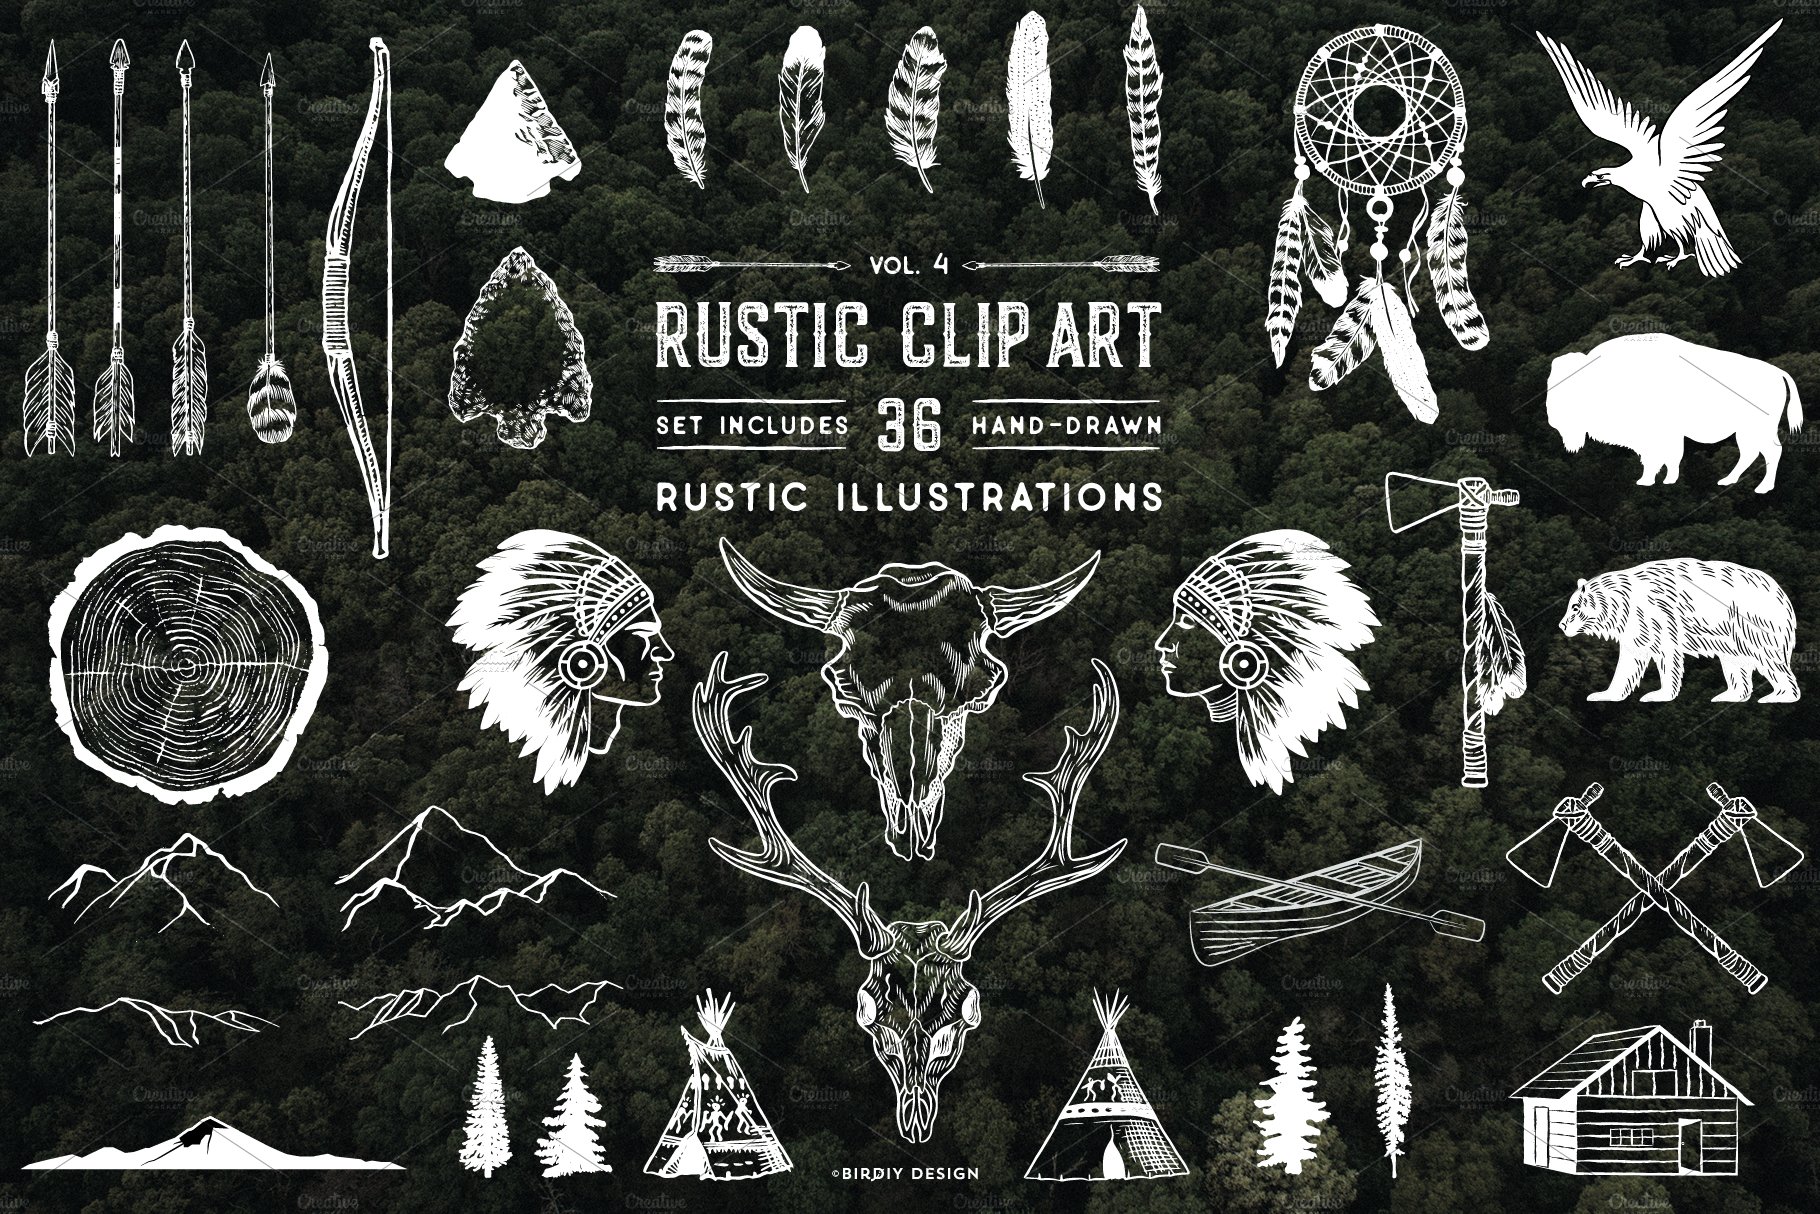 Rustic Clip Art Volume 4 preview image.